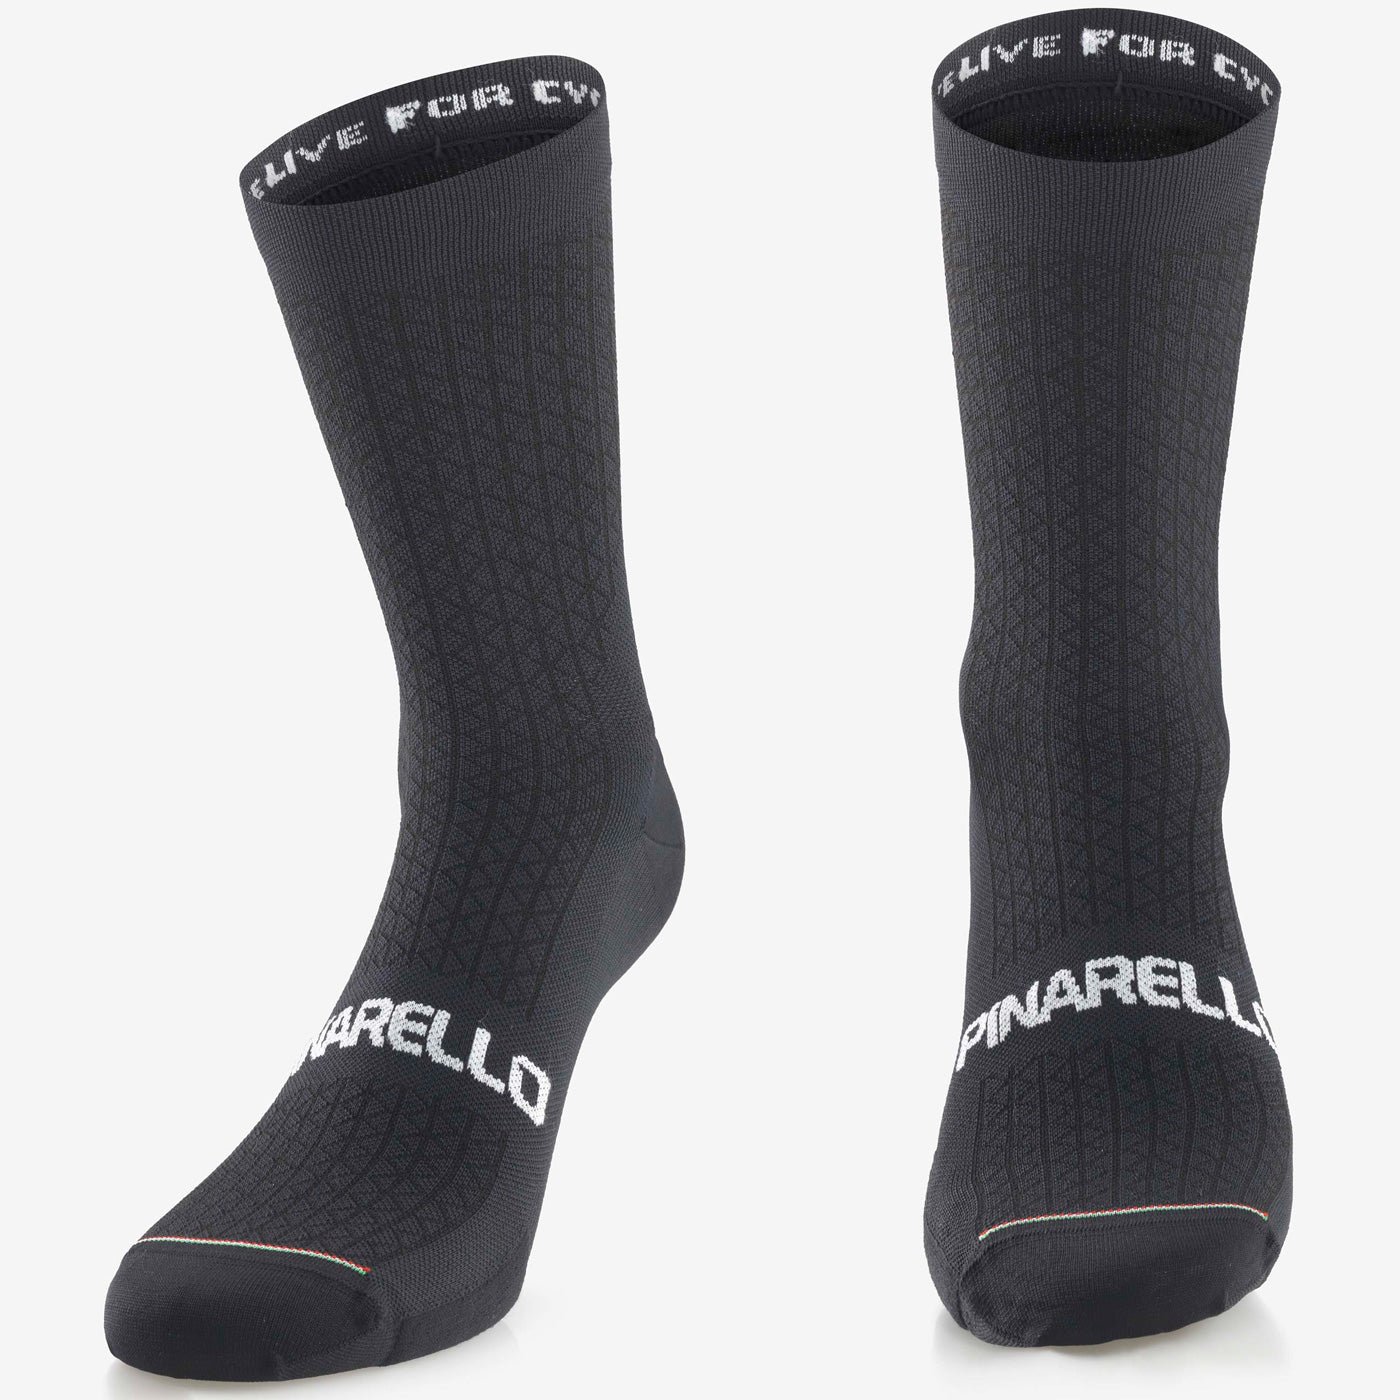 Pinarello Performance socks - Black | All4cycling